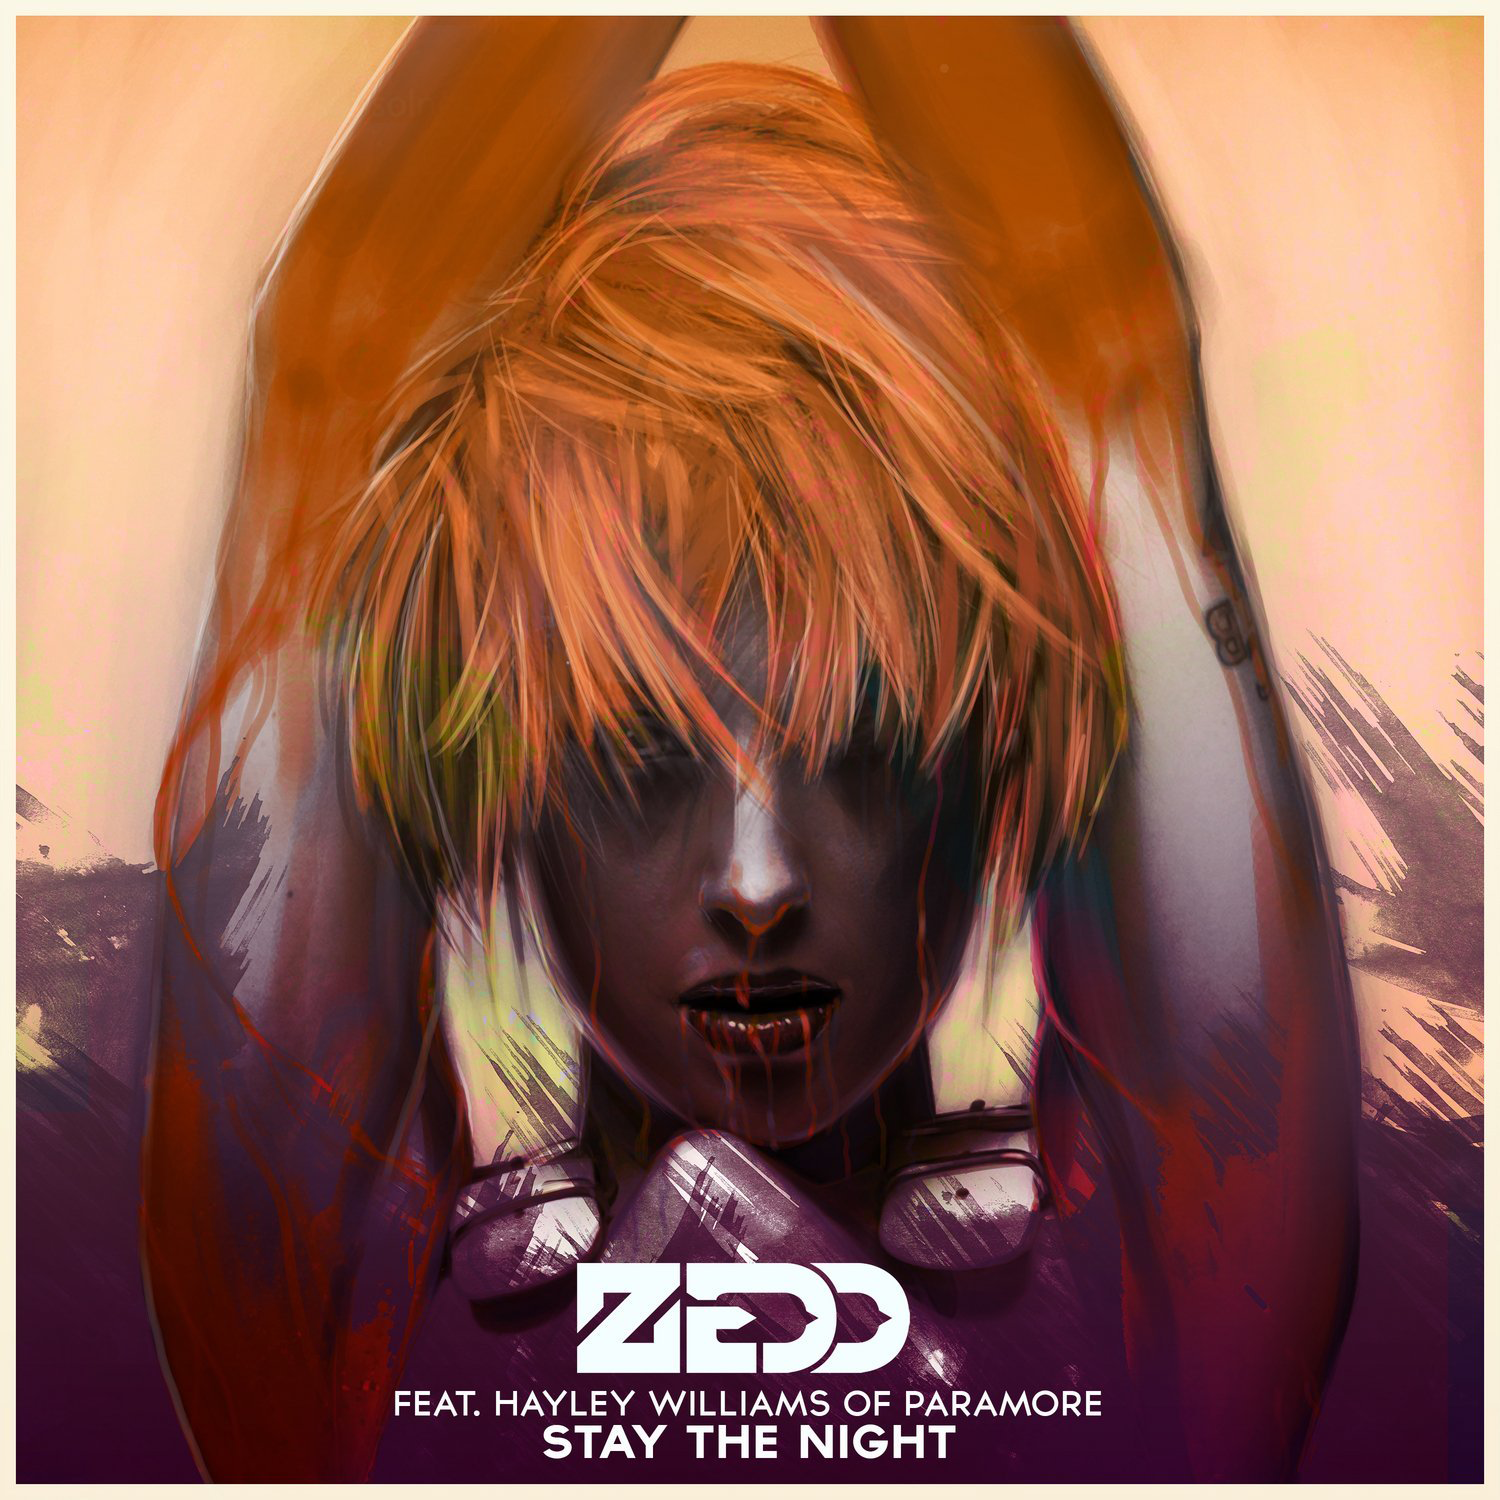 Новый шедевр от Zedd - “Stay the Night”. Hayley Williams